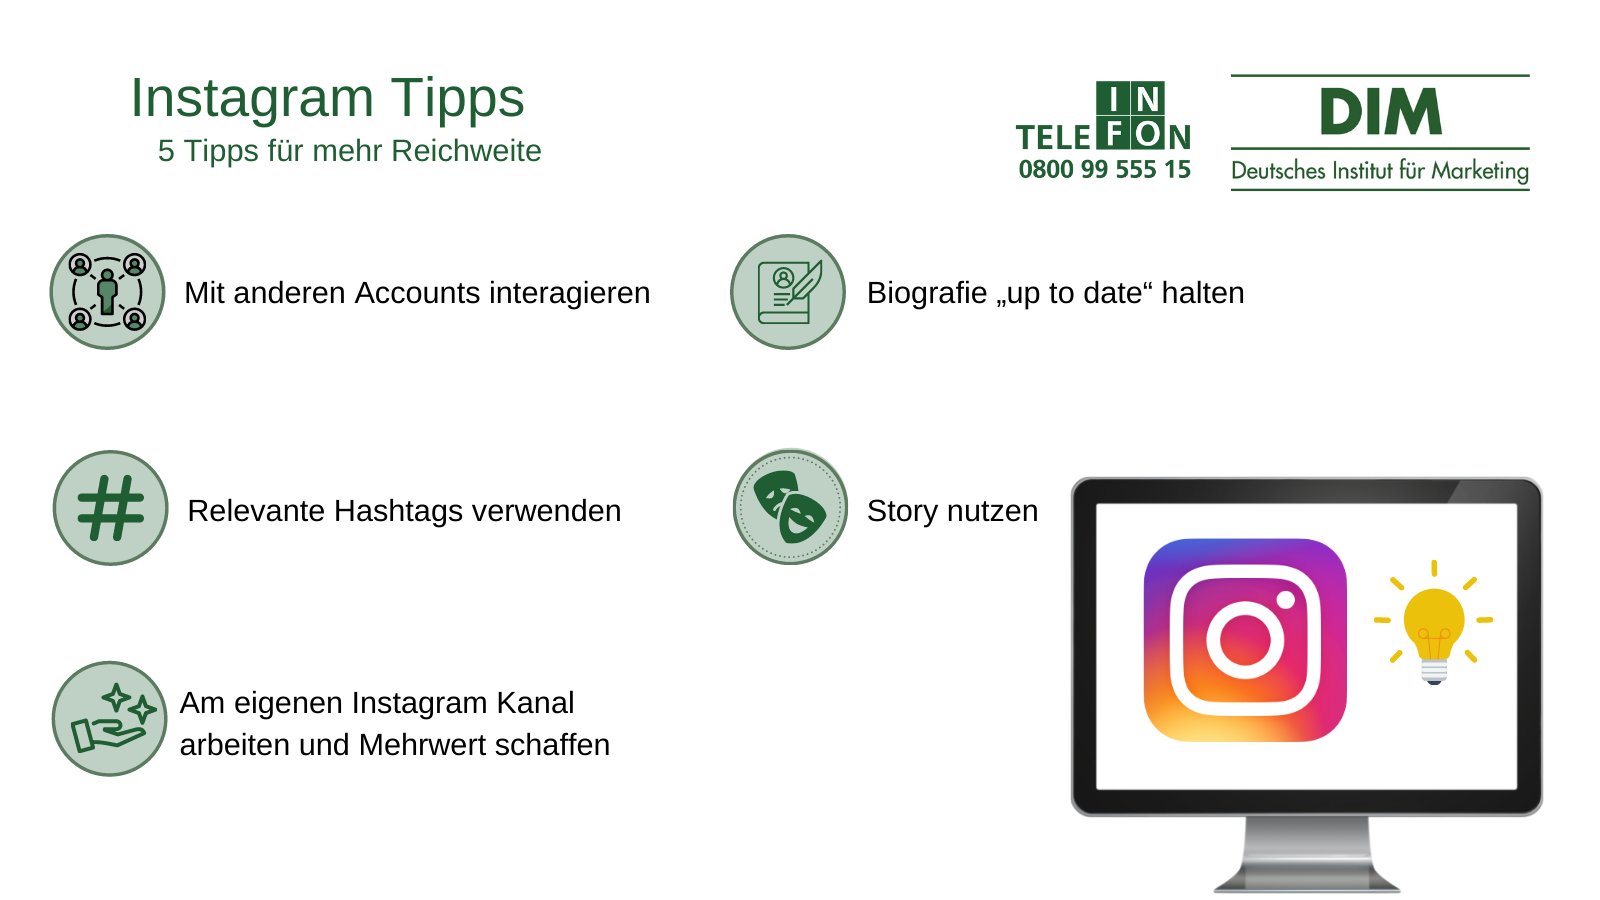 Instagram Tipps